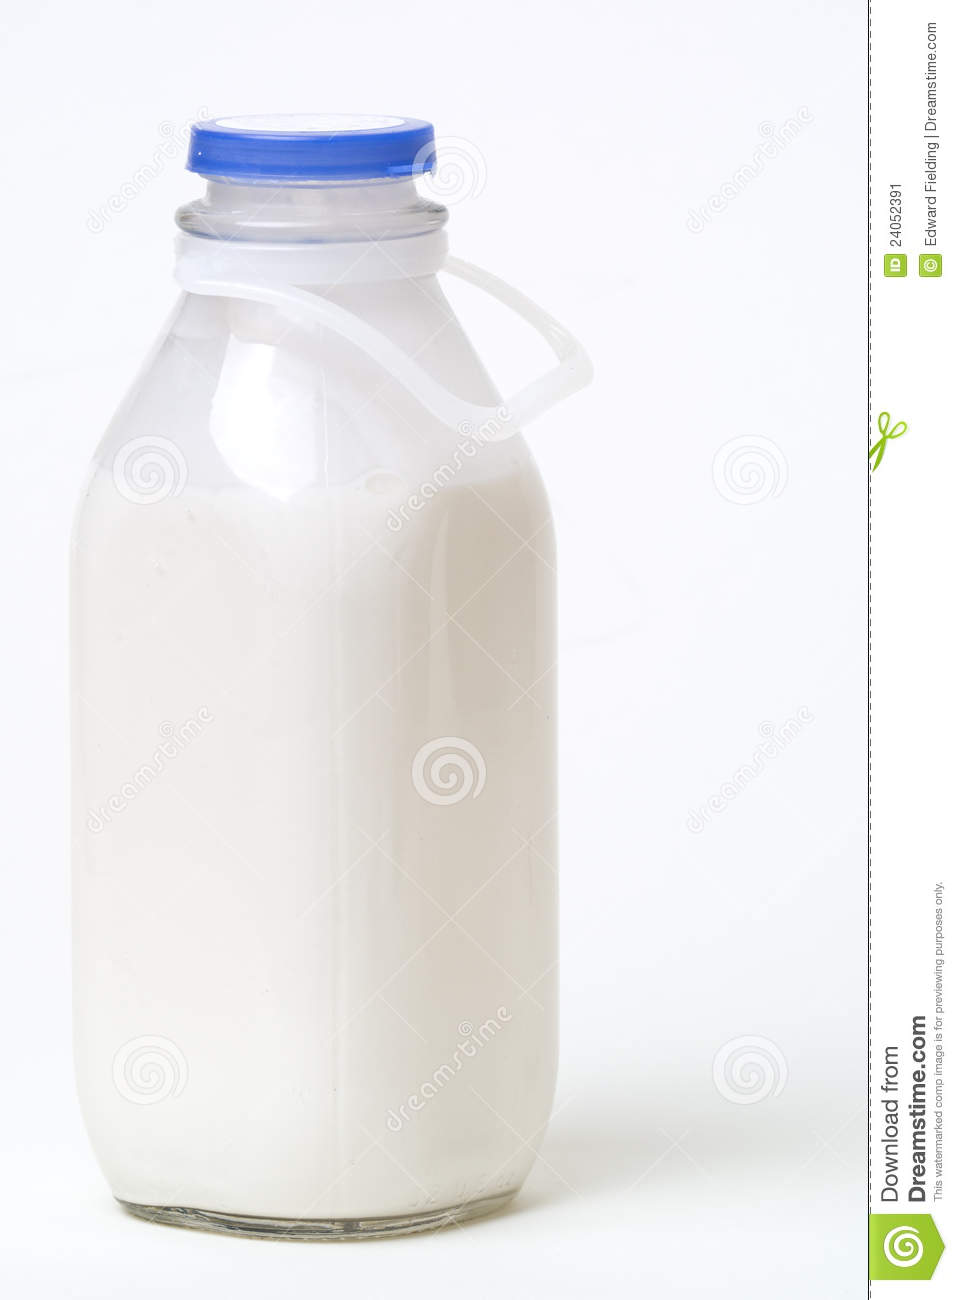 Quart Of Milk Bottle Stock Image   Image  24052391